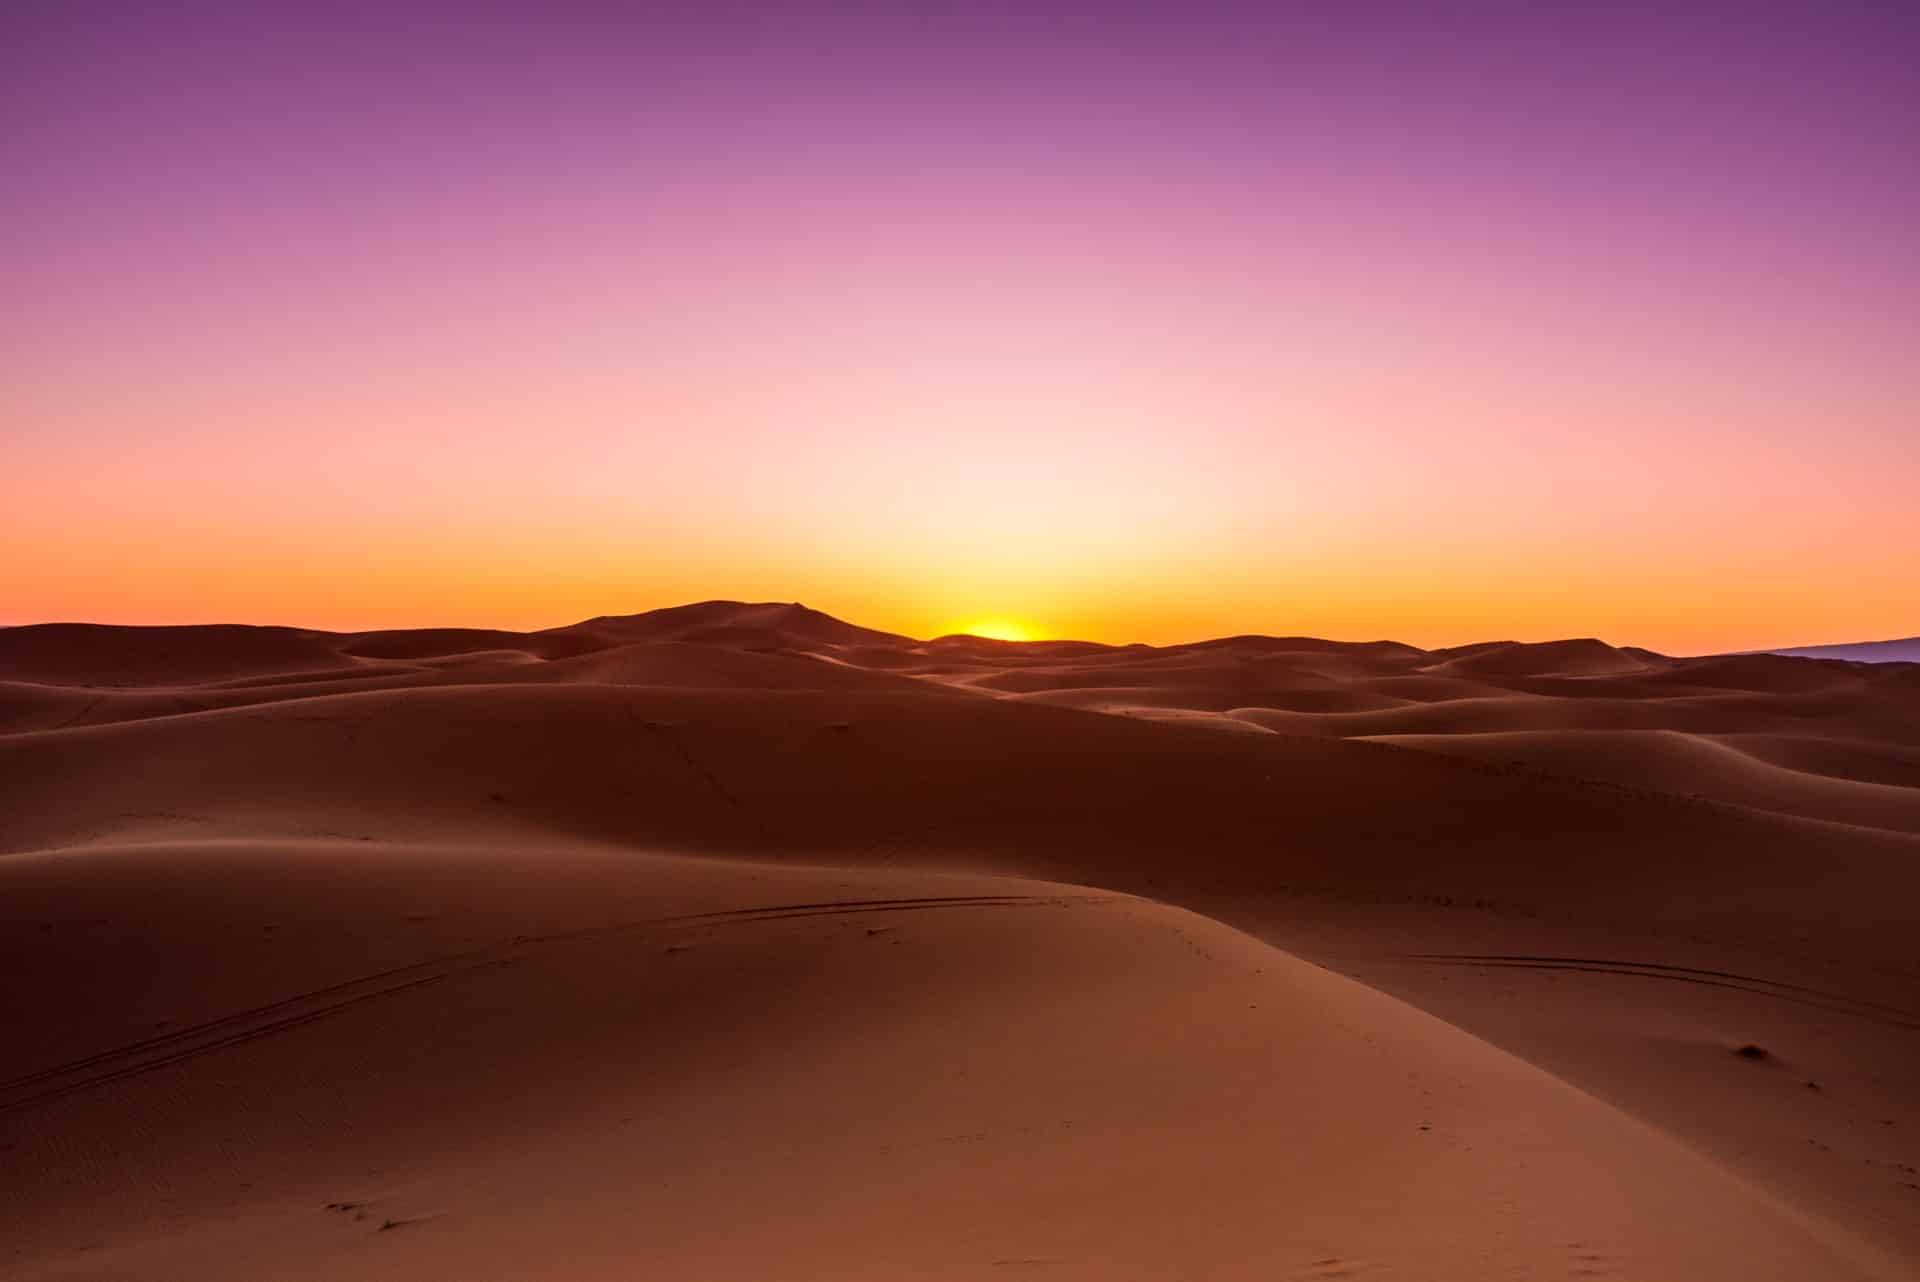 The Erg Chigaga dune area in the Sahara Desert in Morocco